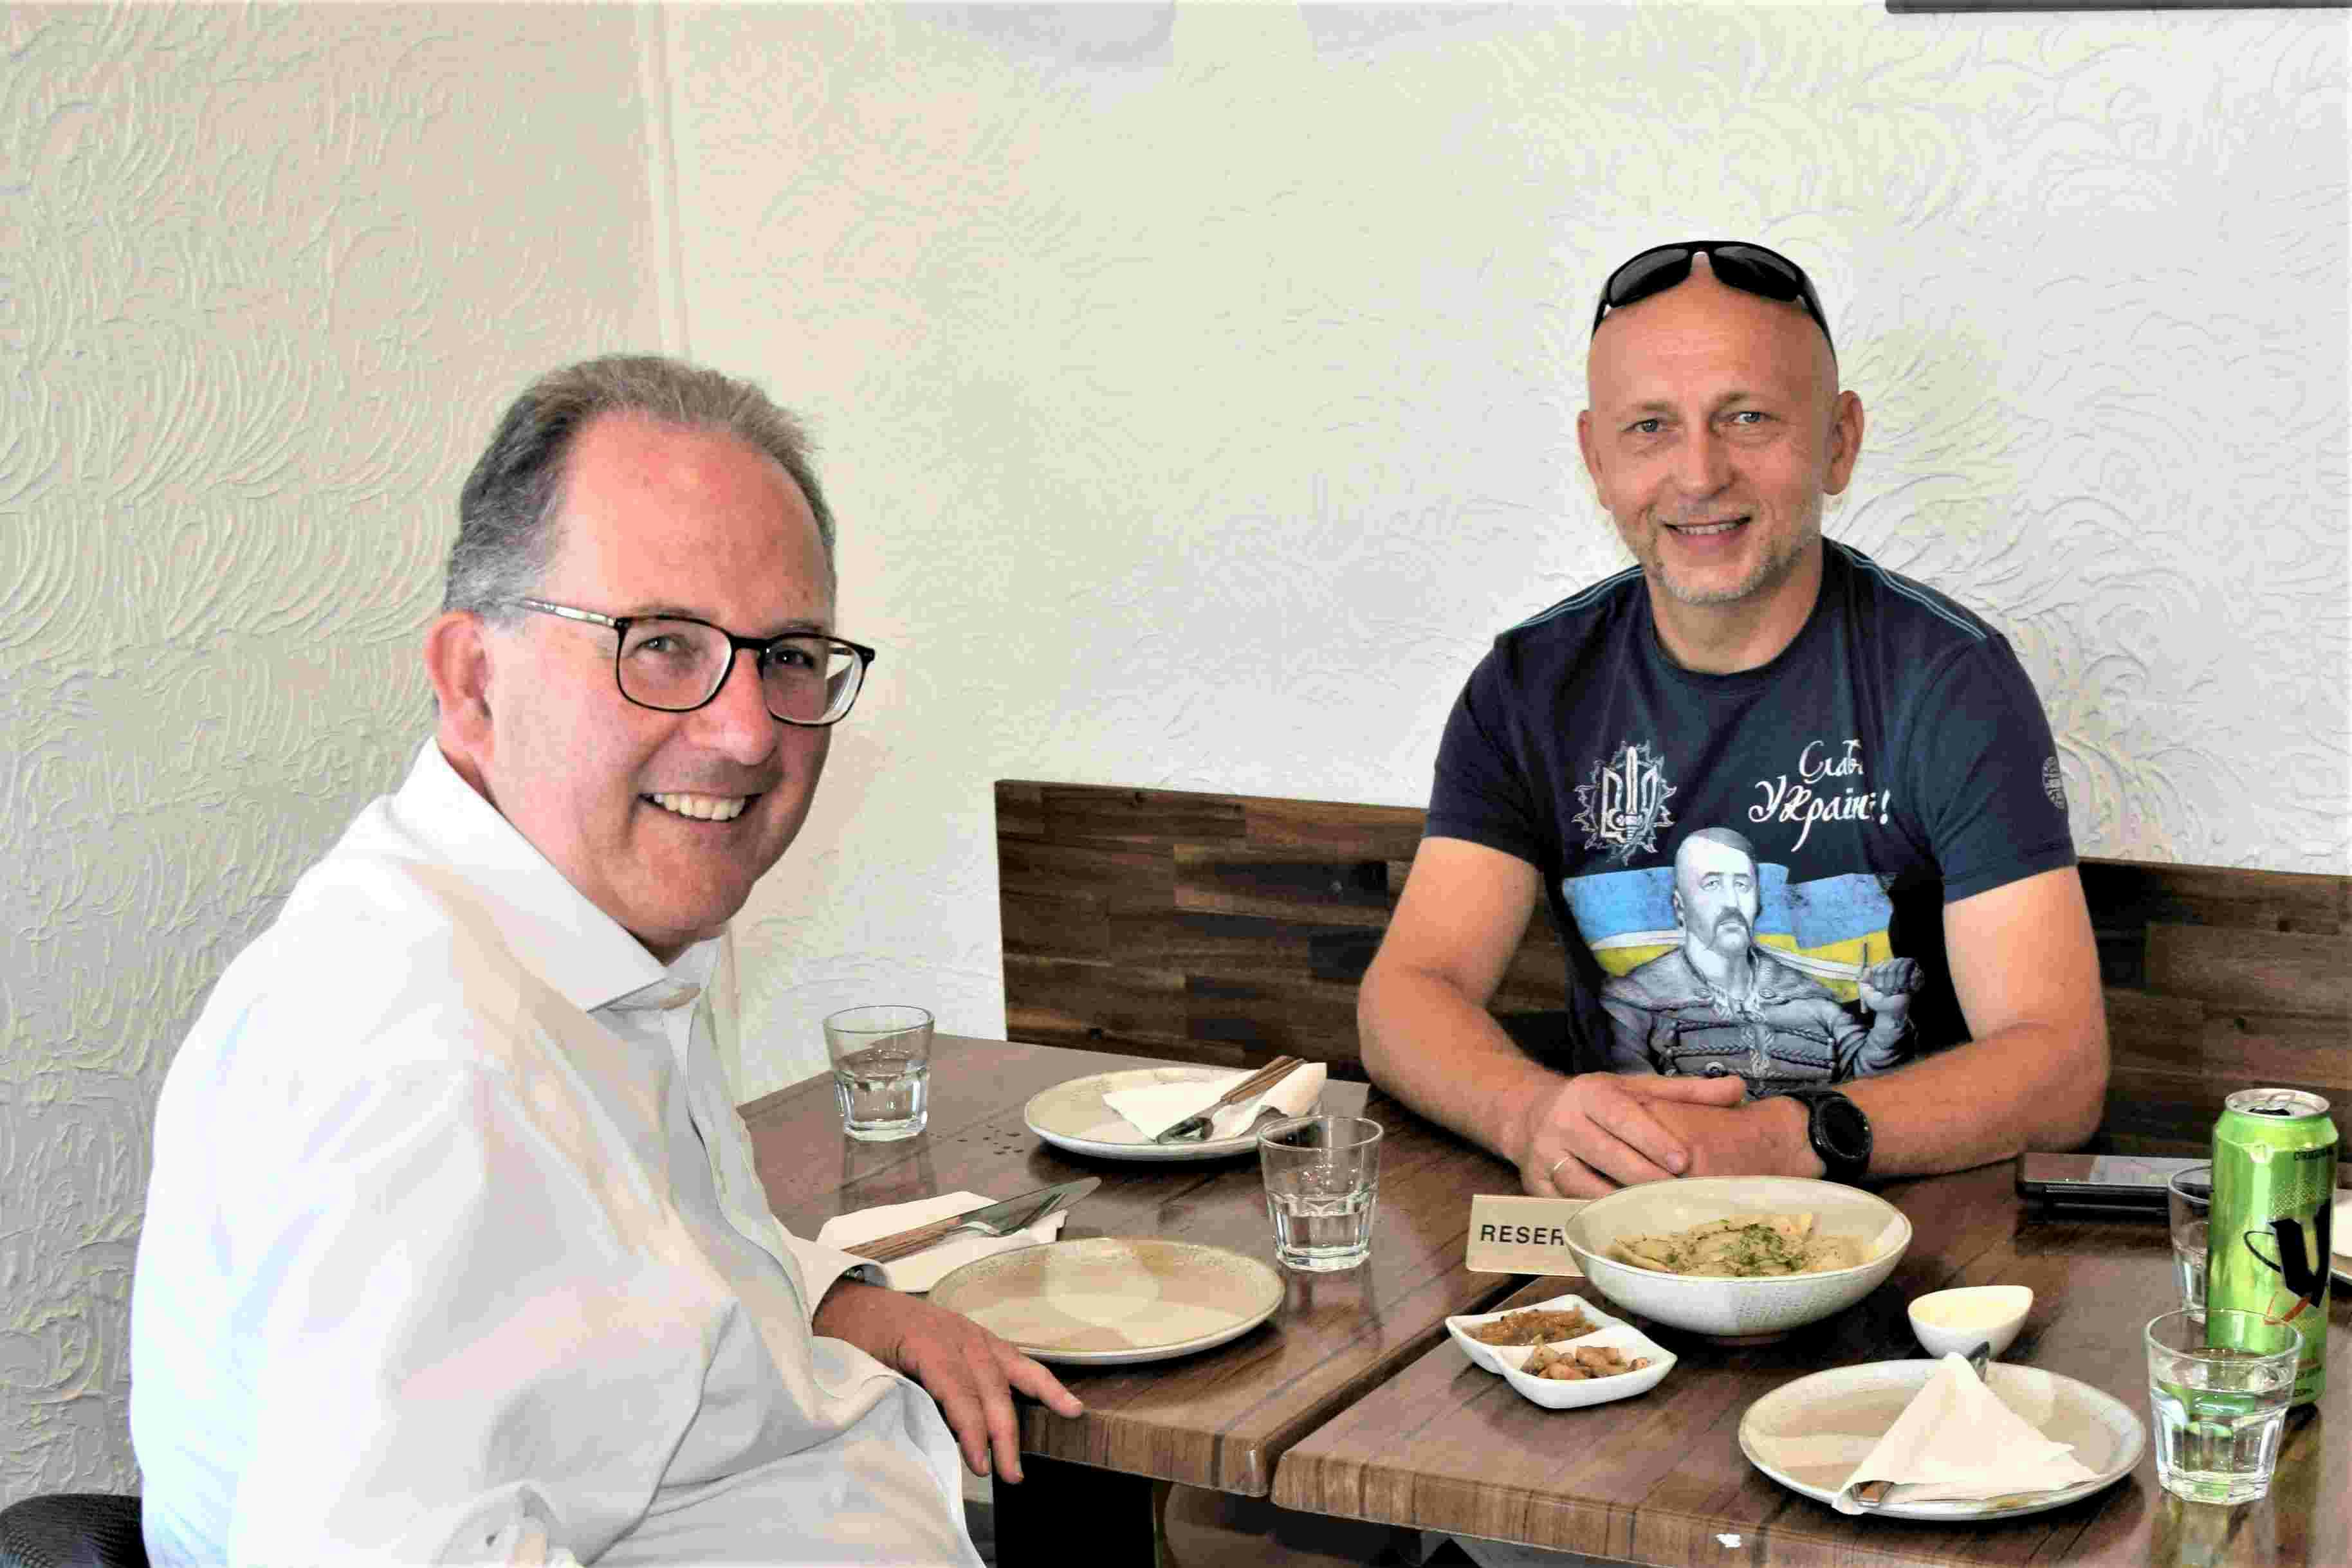 Alister Henskens SC MP with Oleg Sutulov at restaurant